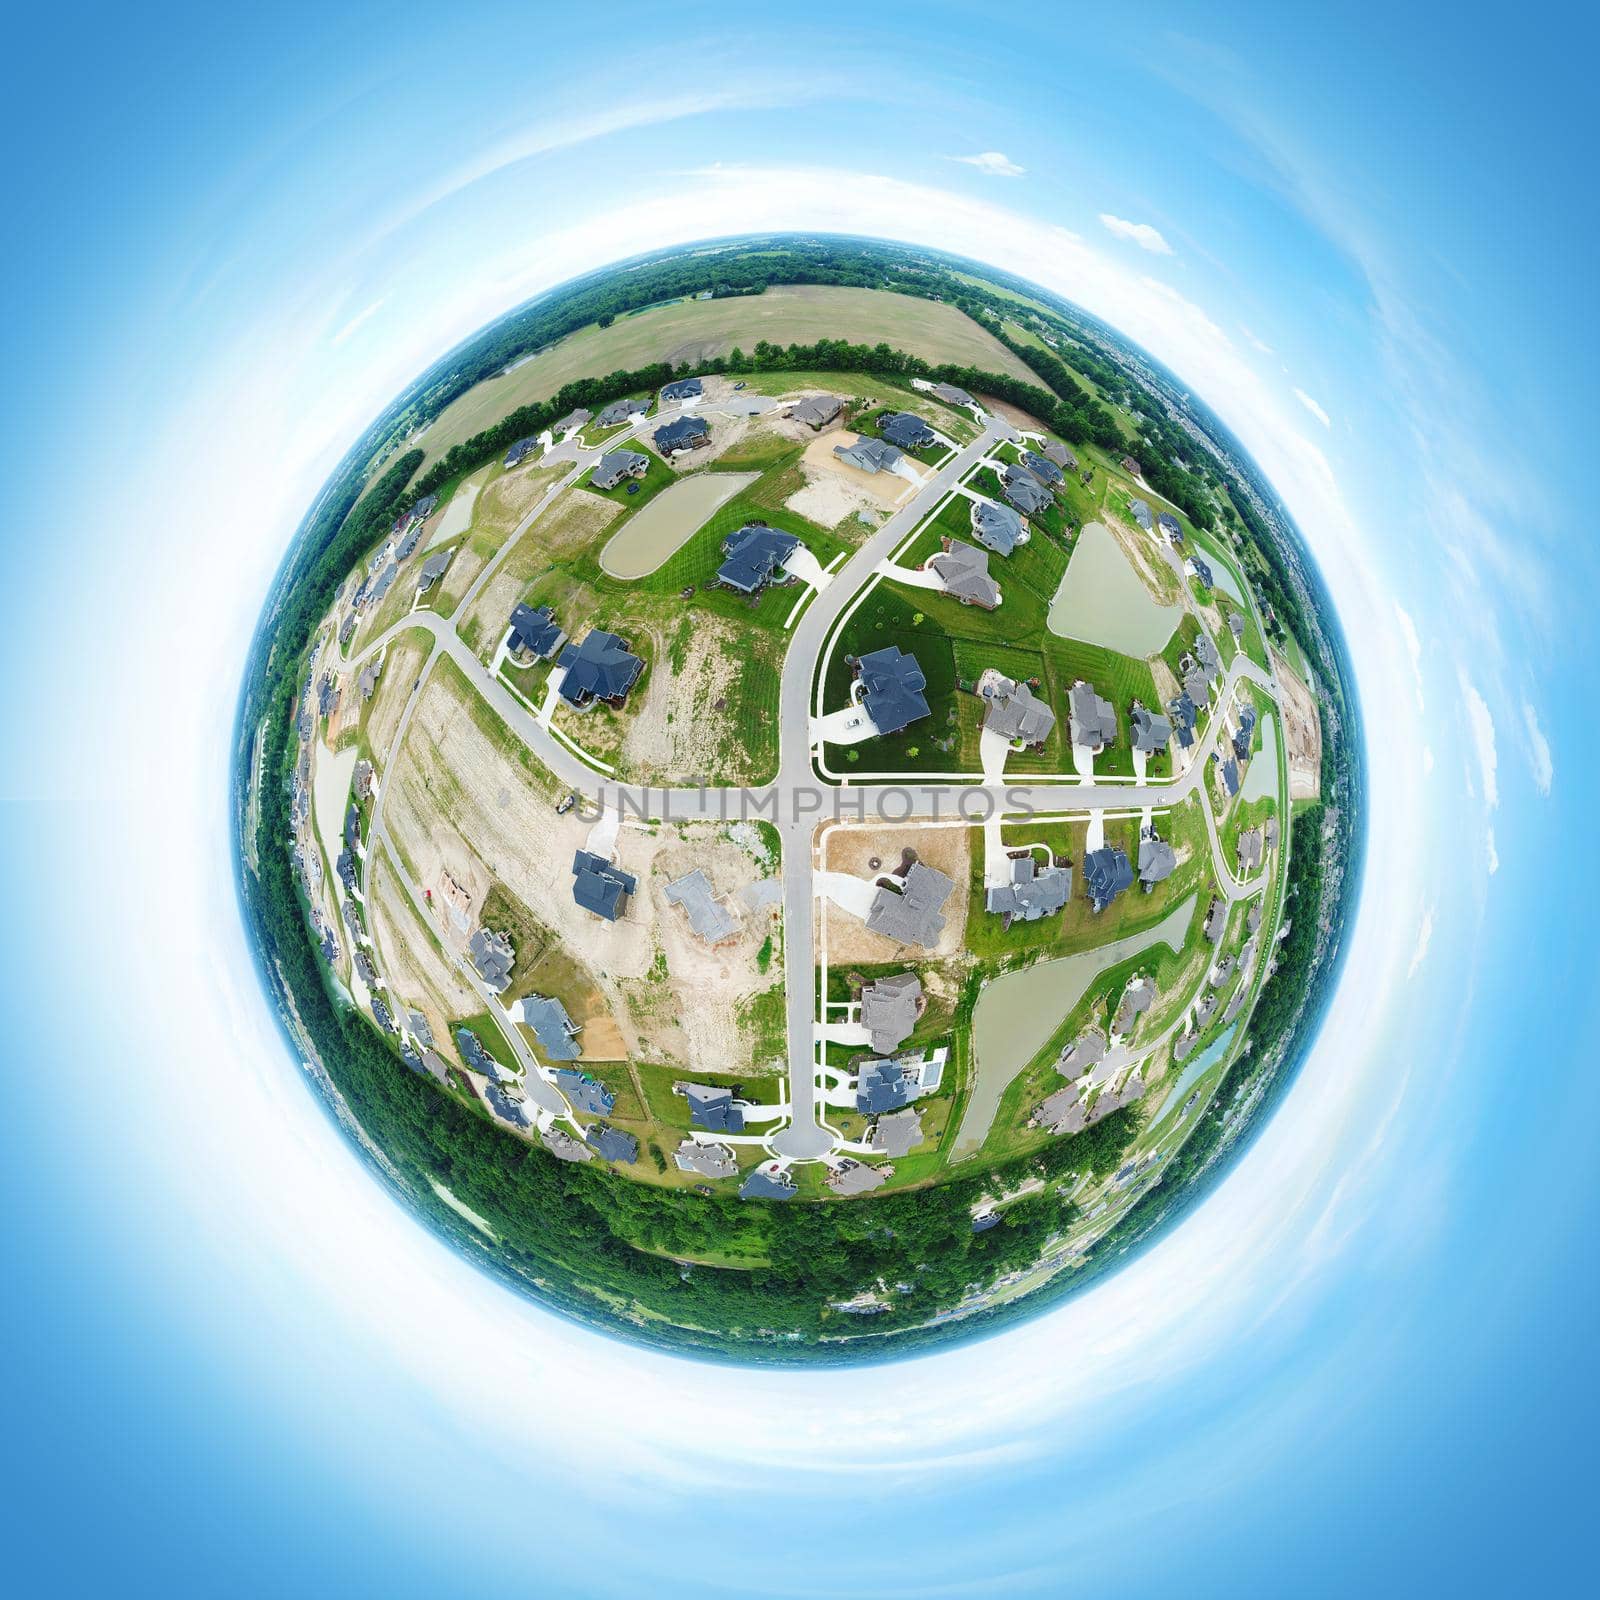 Image of World miniature aerial of neighborhood under construction